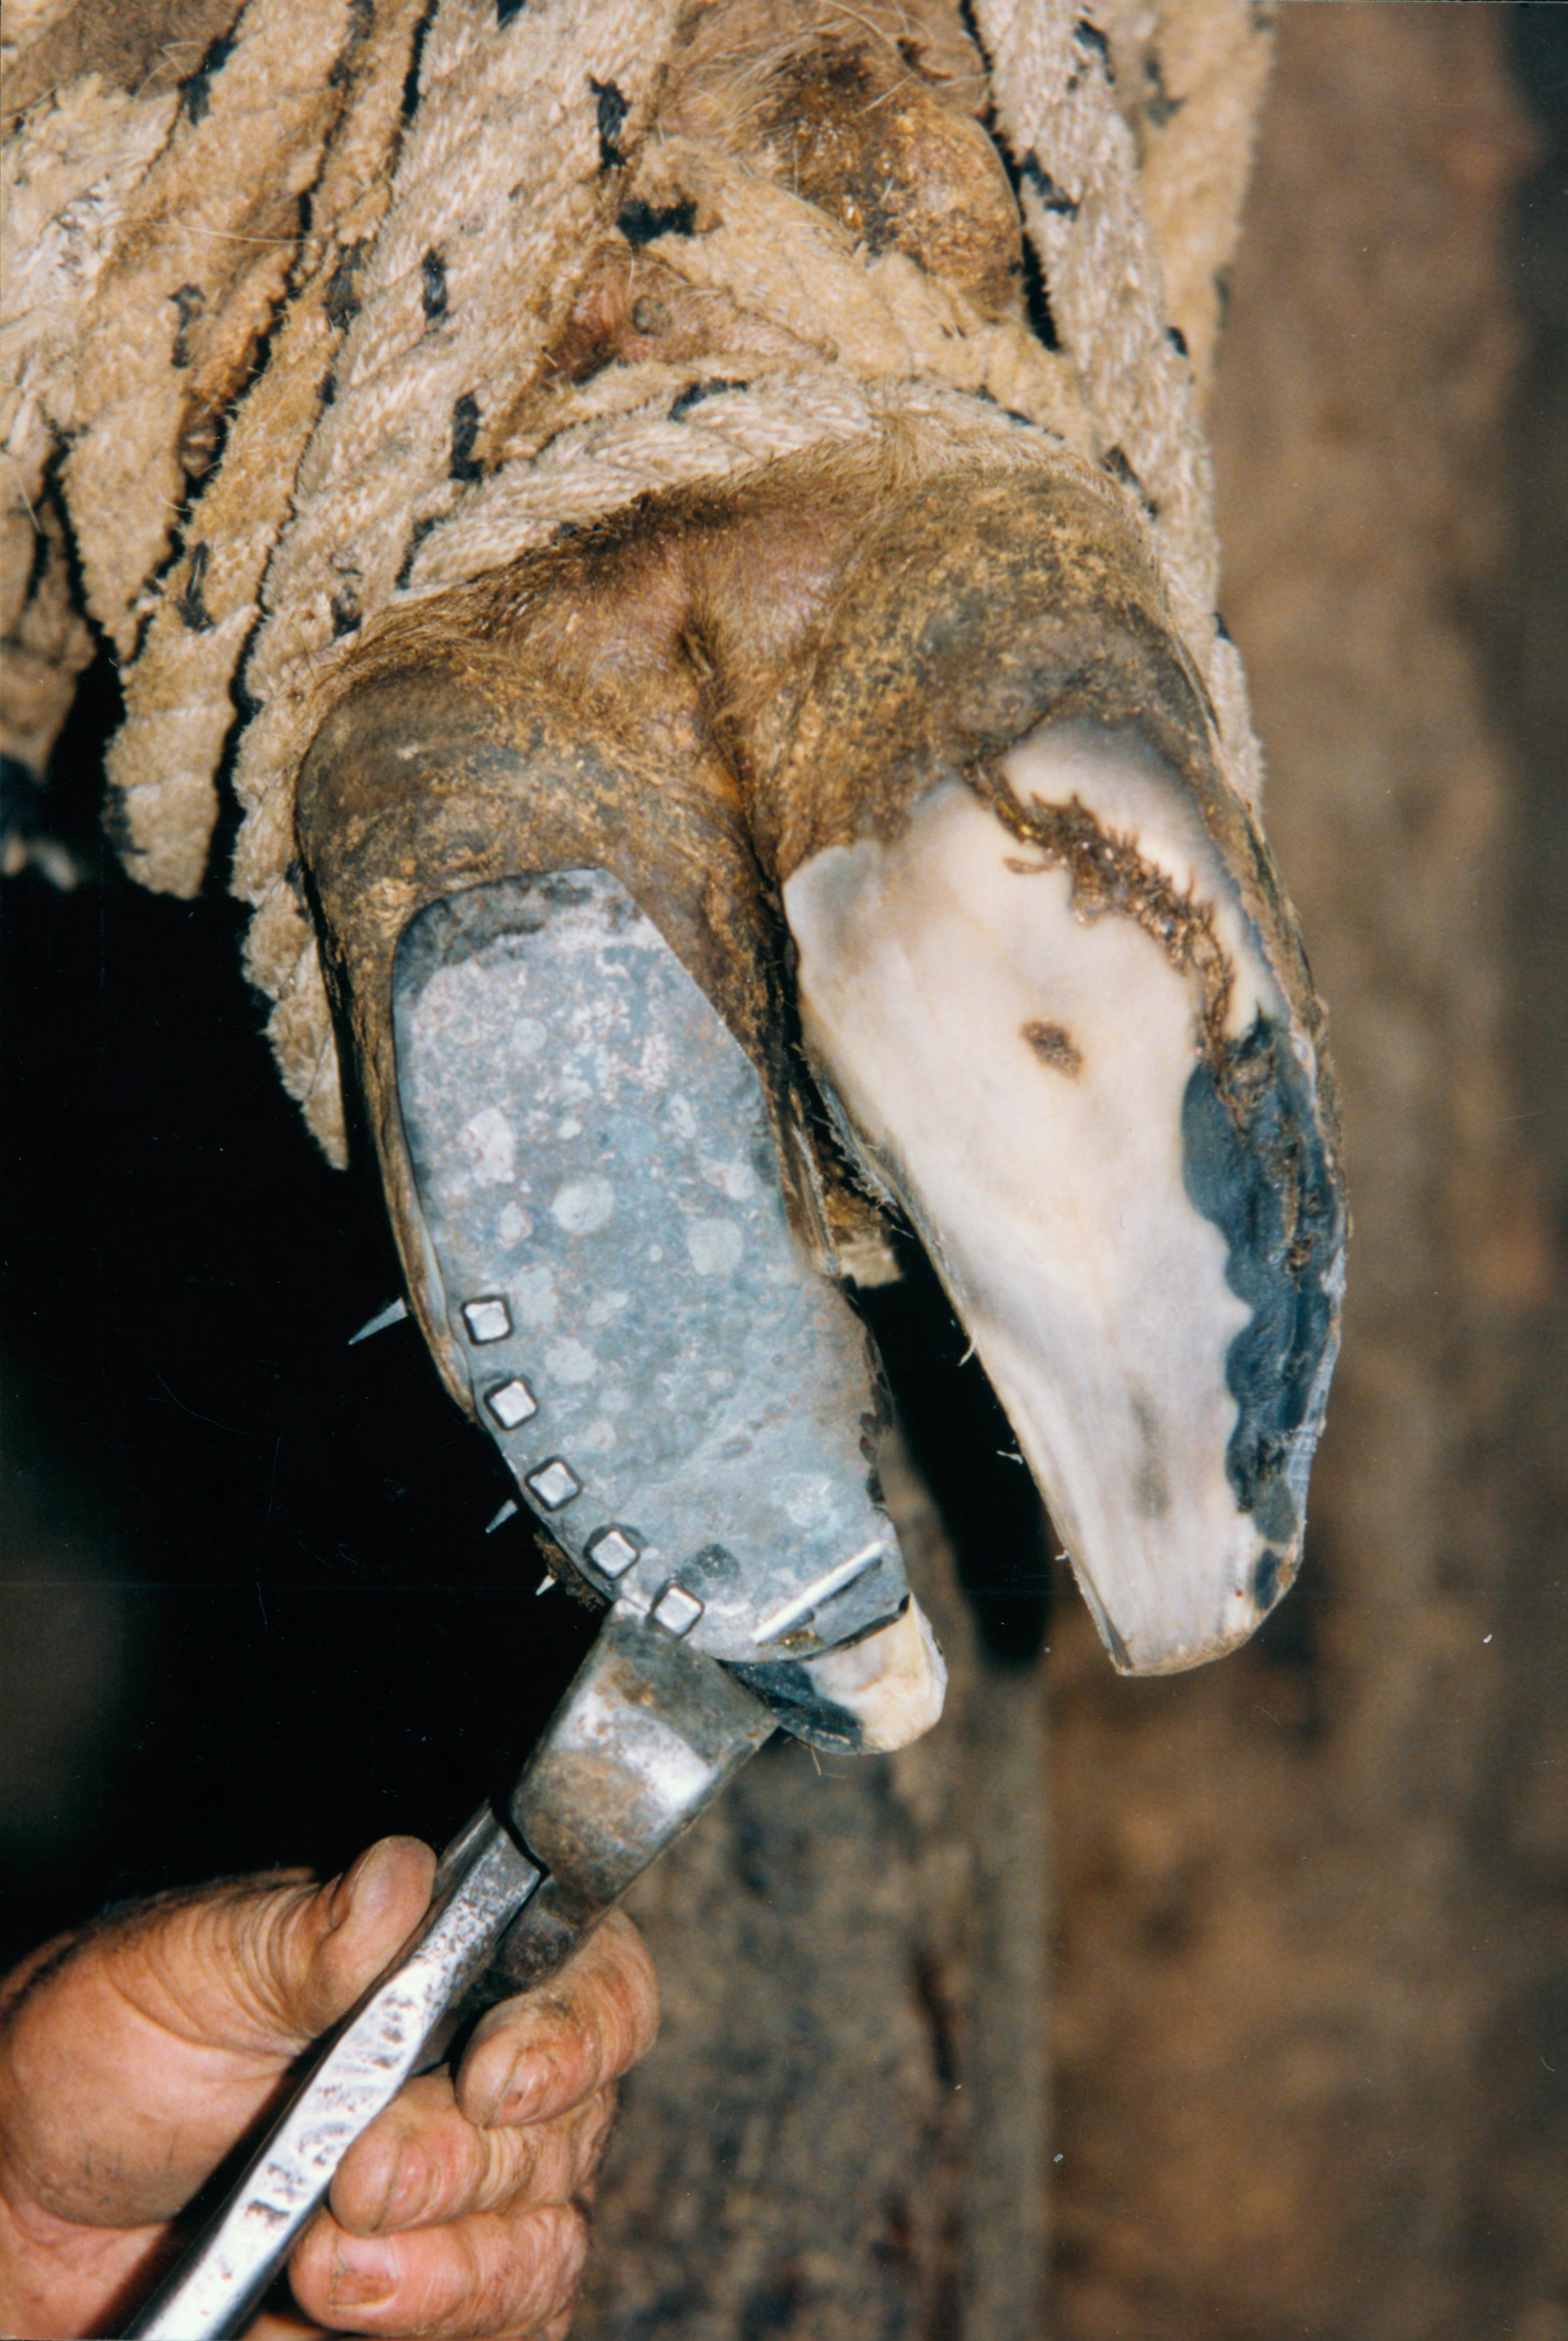 Fitting of the shoe on the hoof by nailing. Maruri-Jatabe (Bizkaia), 1999